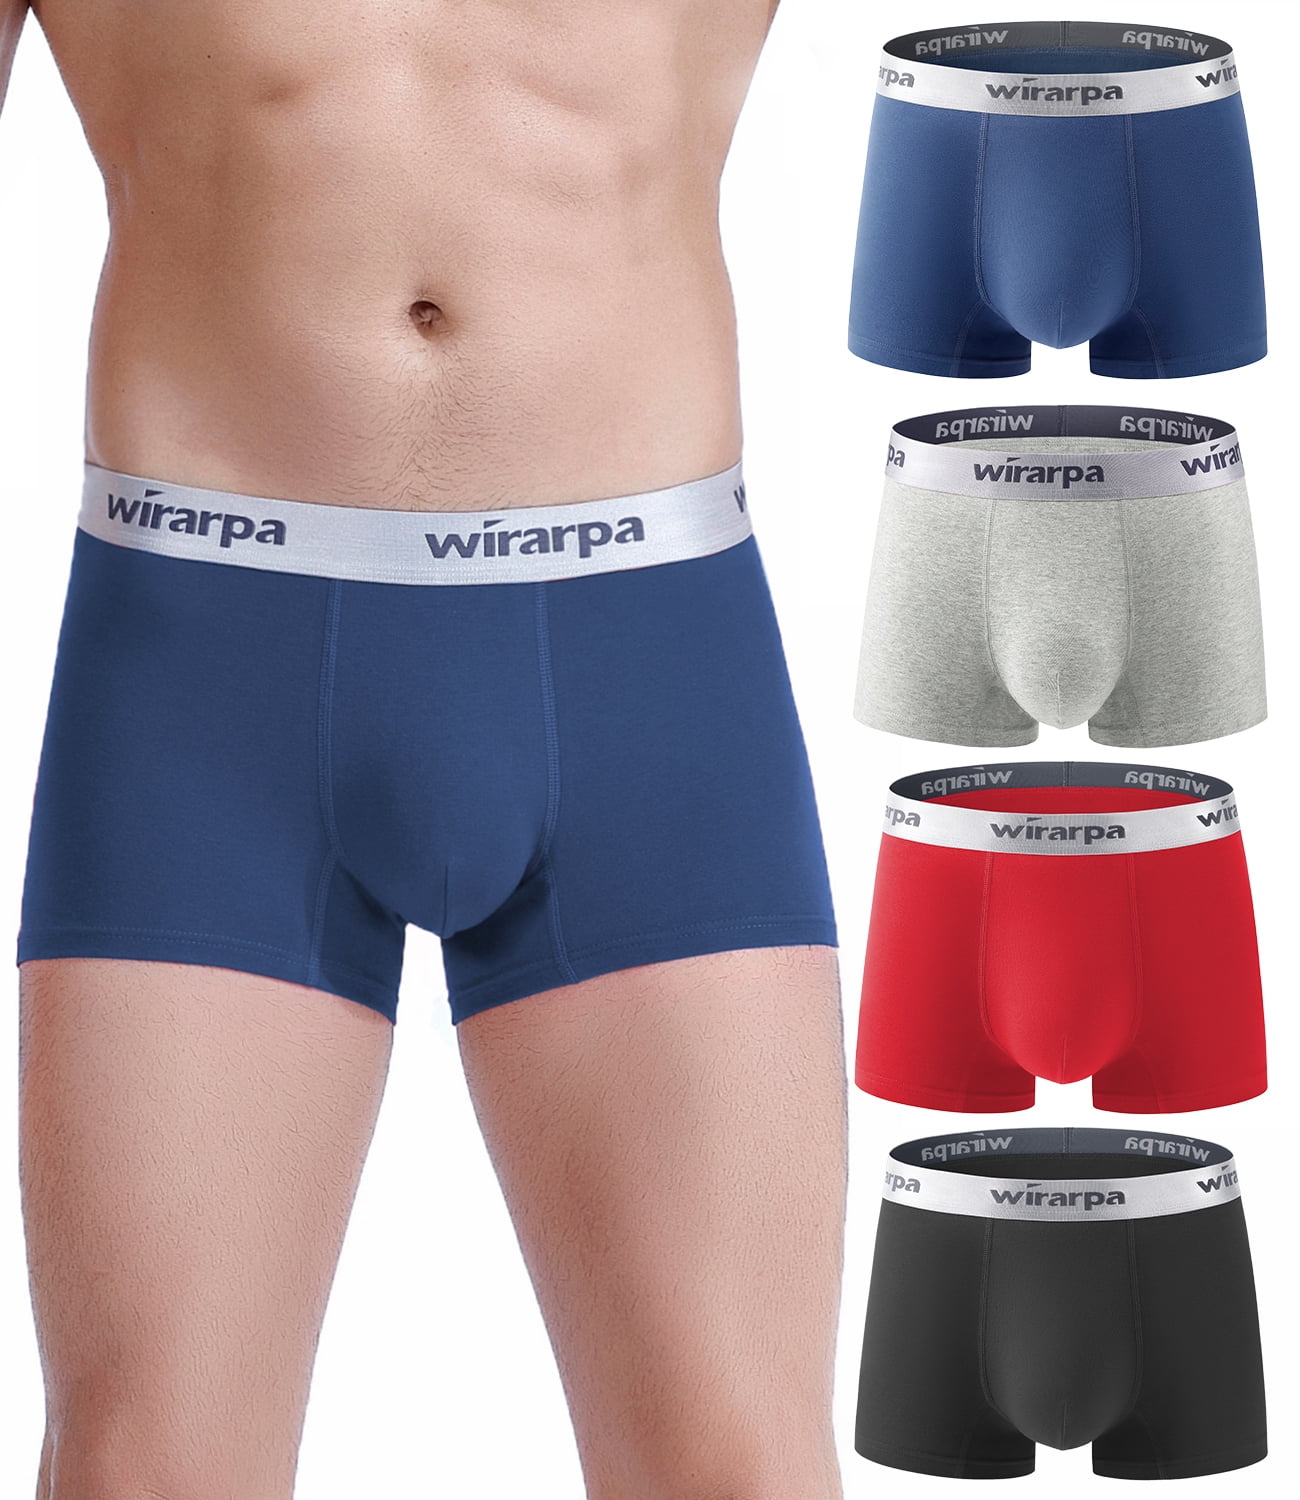 wirarpa Mens Multipack Comfy Cotton Stretch Underwear Boxer Briefs Open Fly 